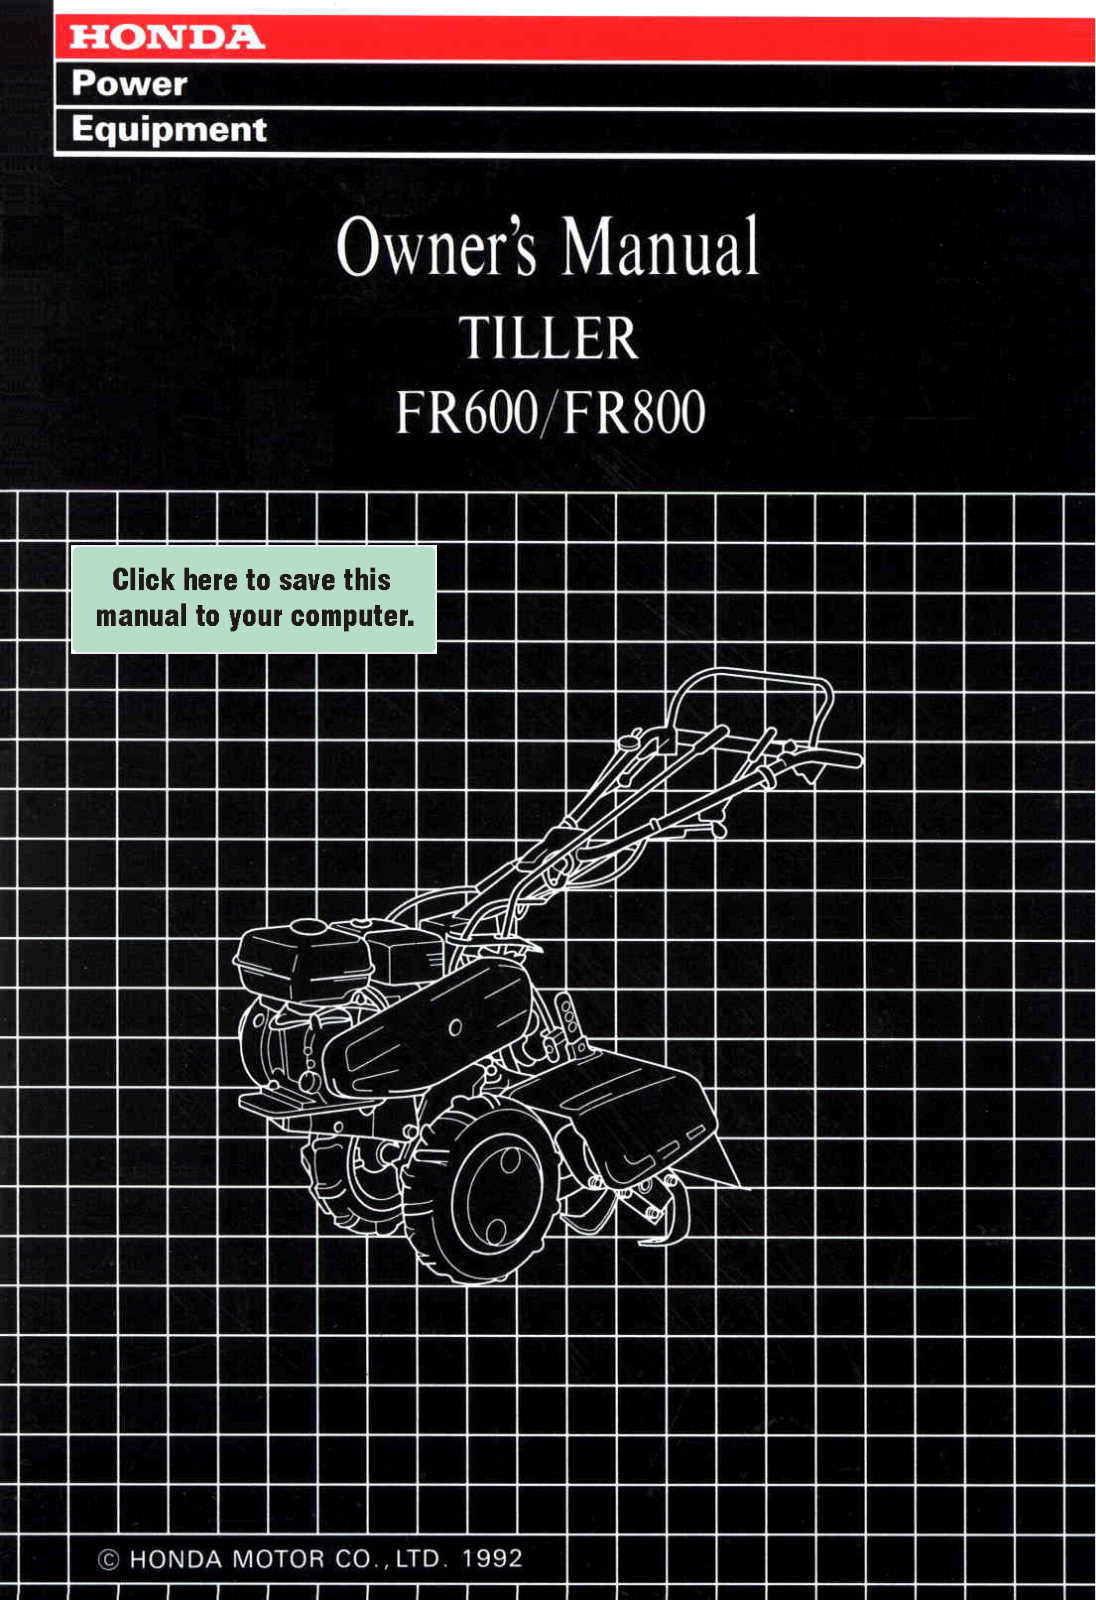 Honda FR600, FR800 Owner's Manual